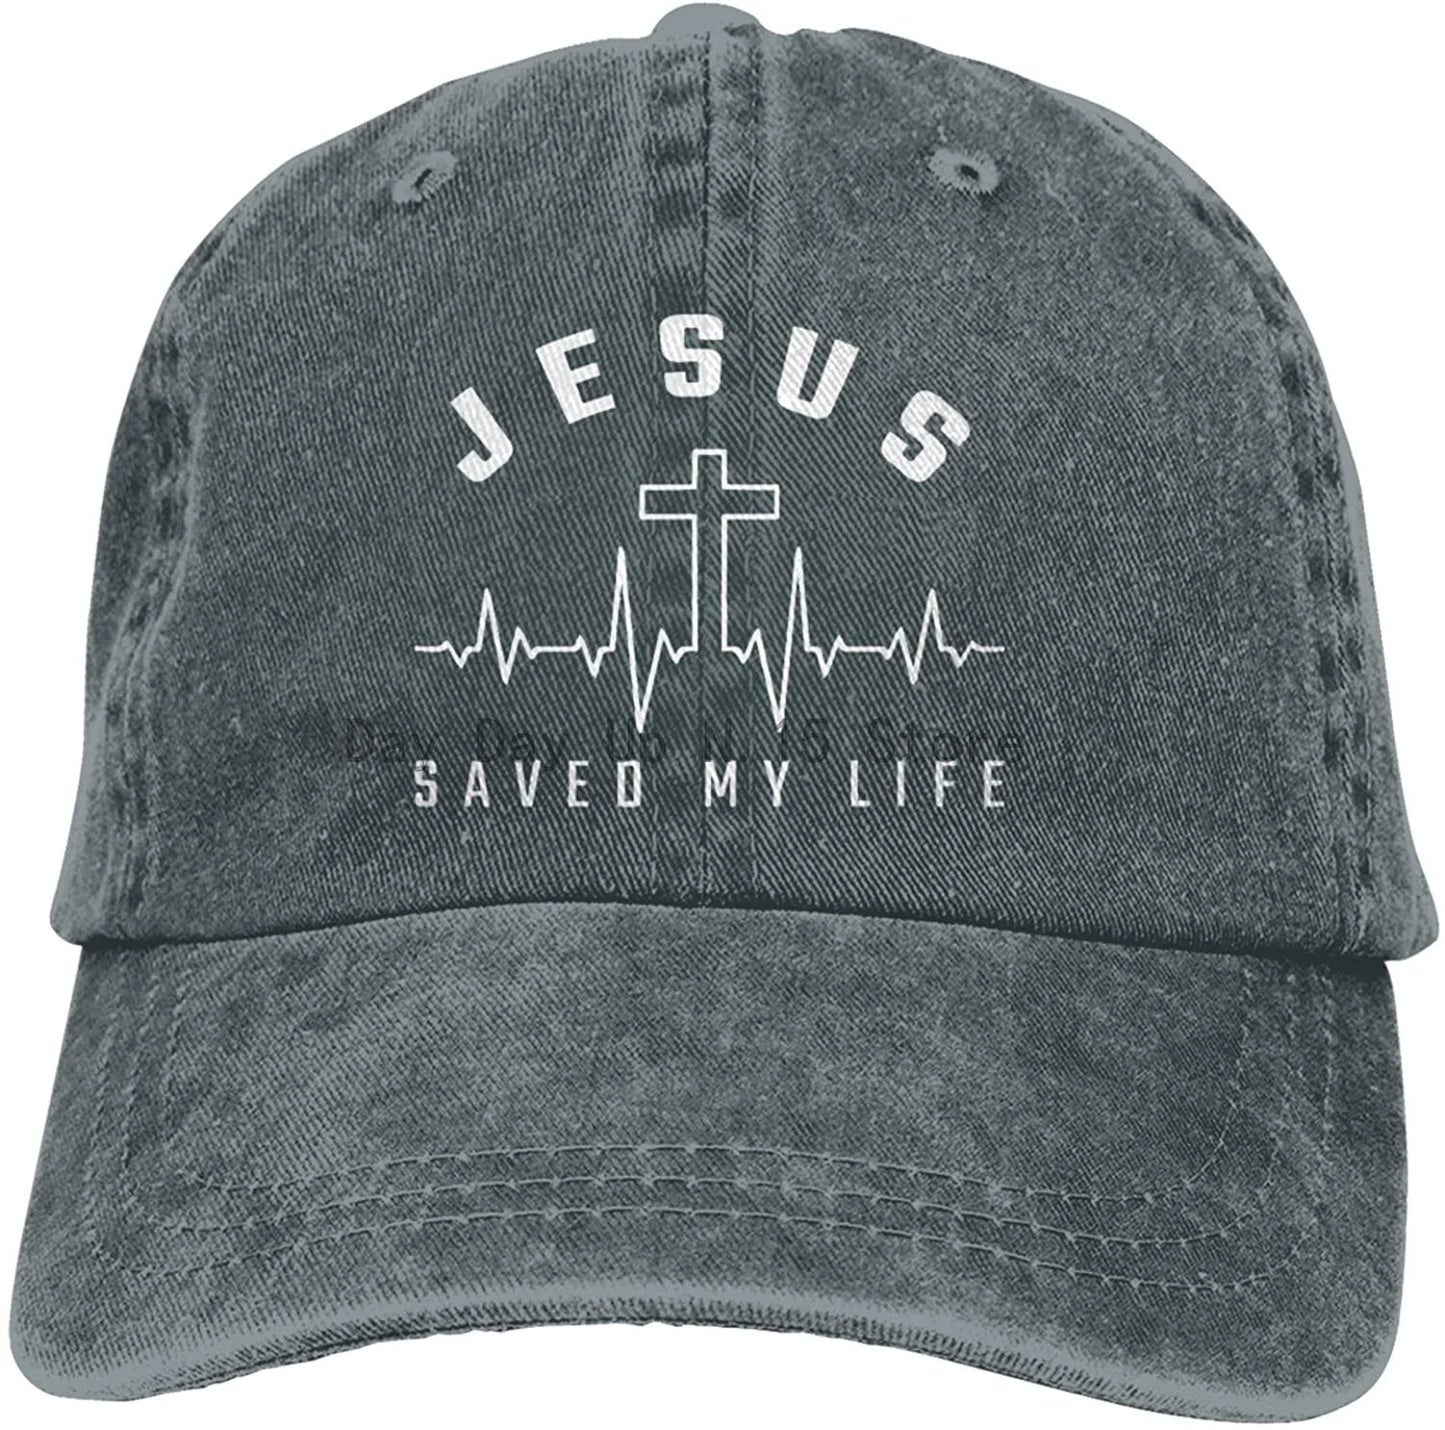 Jesus Saved My Life Hat - Christian Baseball Cap | Washed Cotton Denim Dad Hat for Men & Women